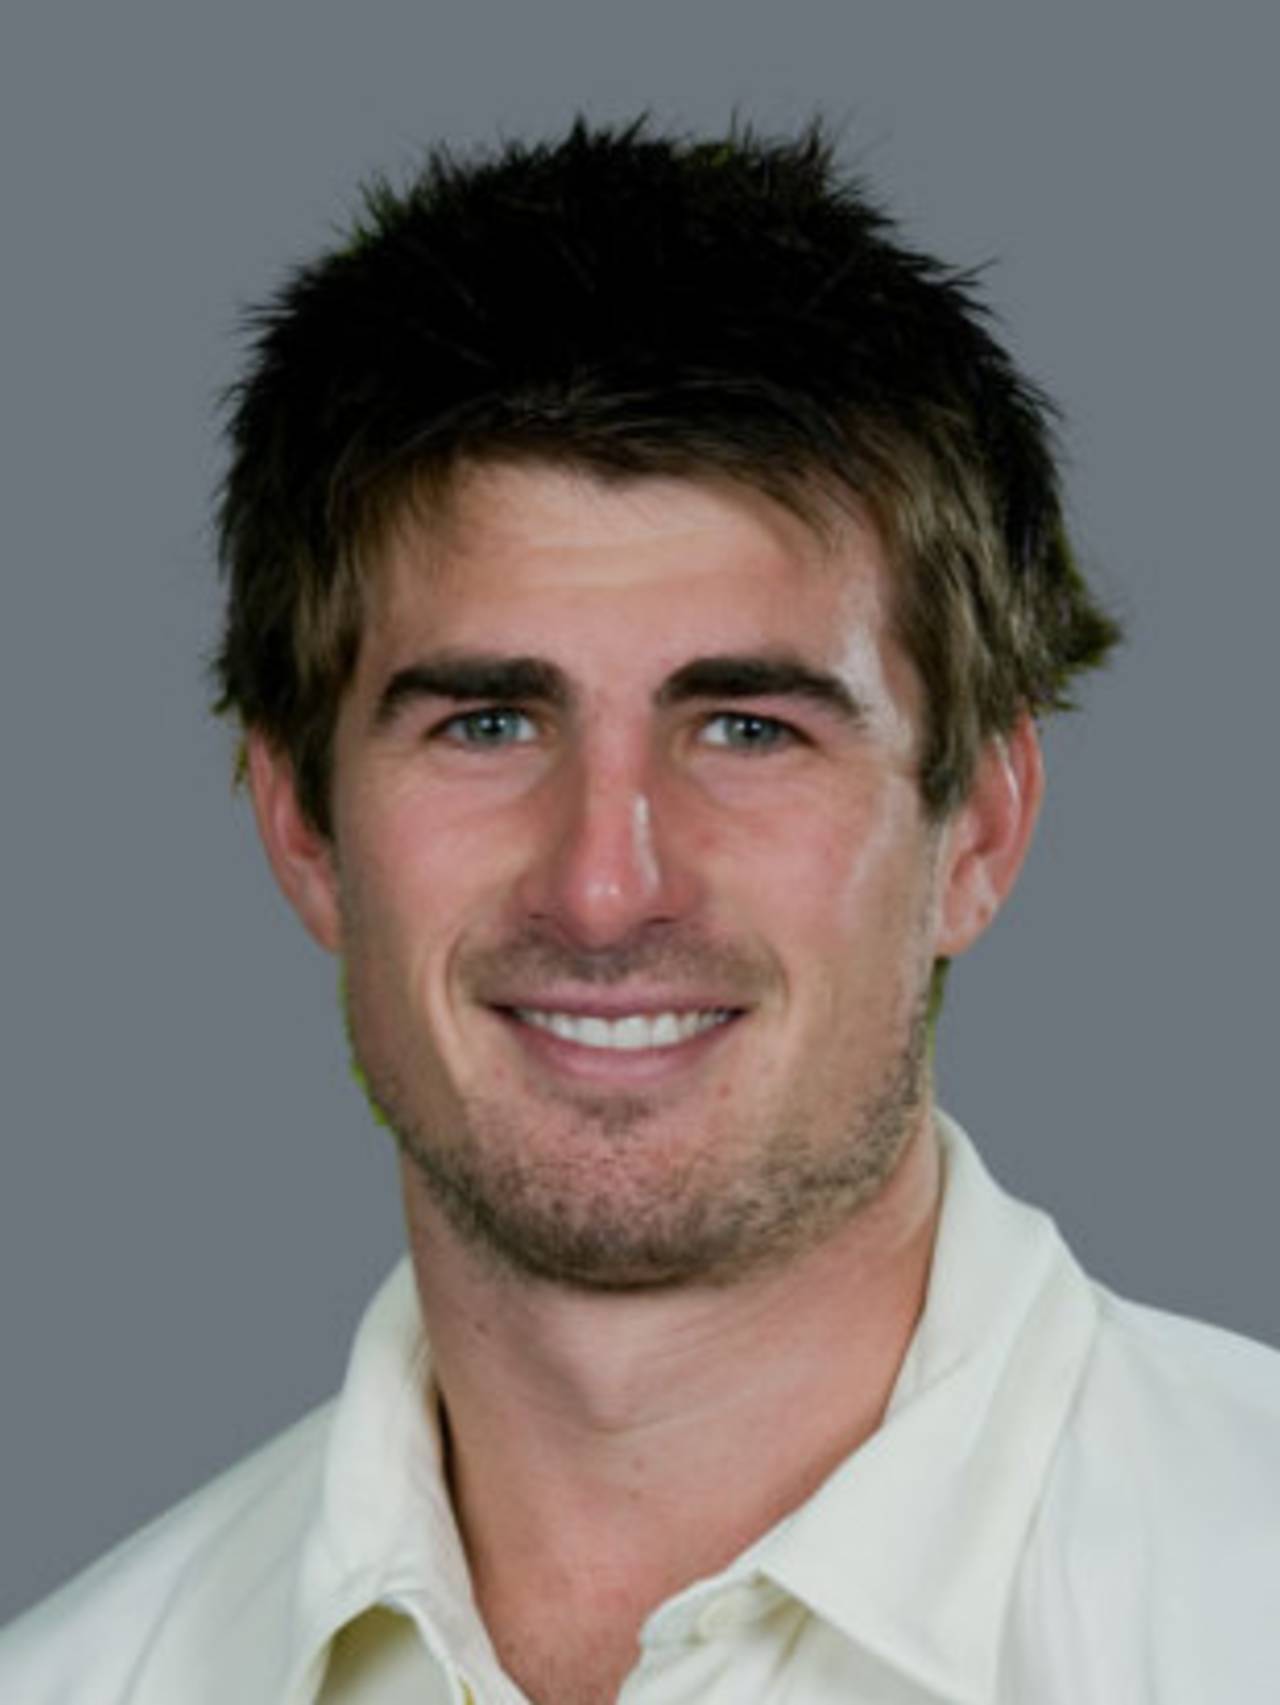 Nathan Reardon steps into Queensland's line-up for James Hopes&nbsp;&nbsp;&bull;&nbsp;&nbsp;Queensland Cricket